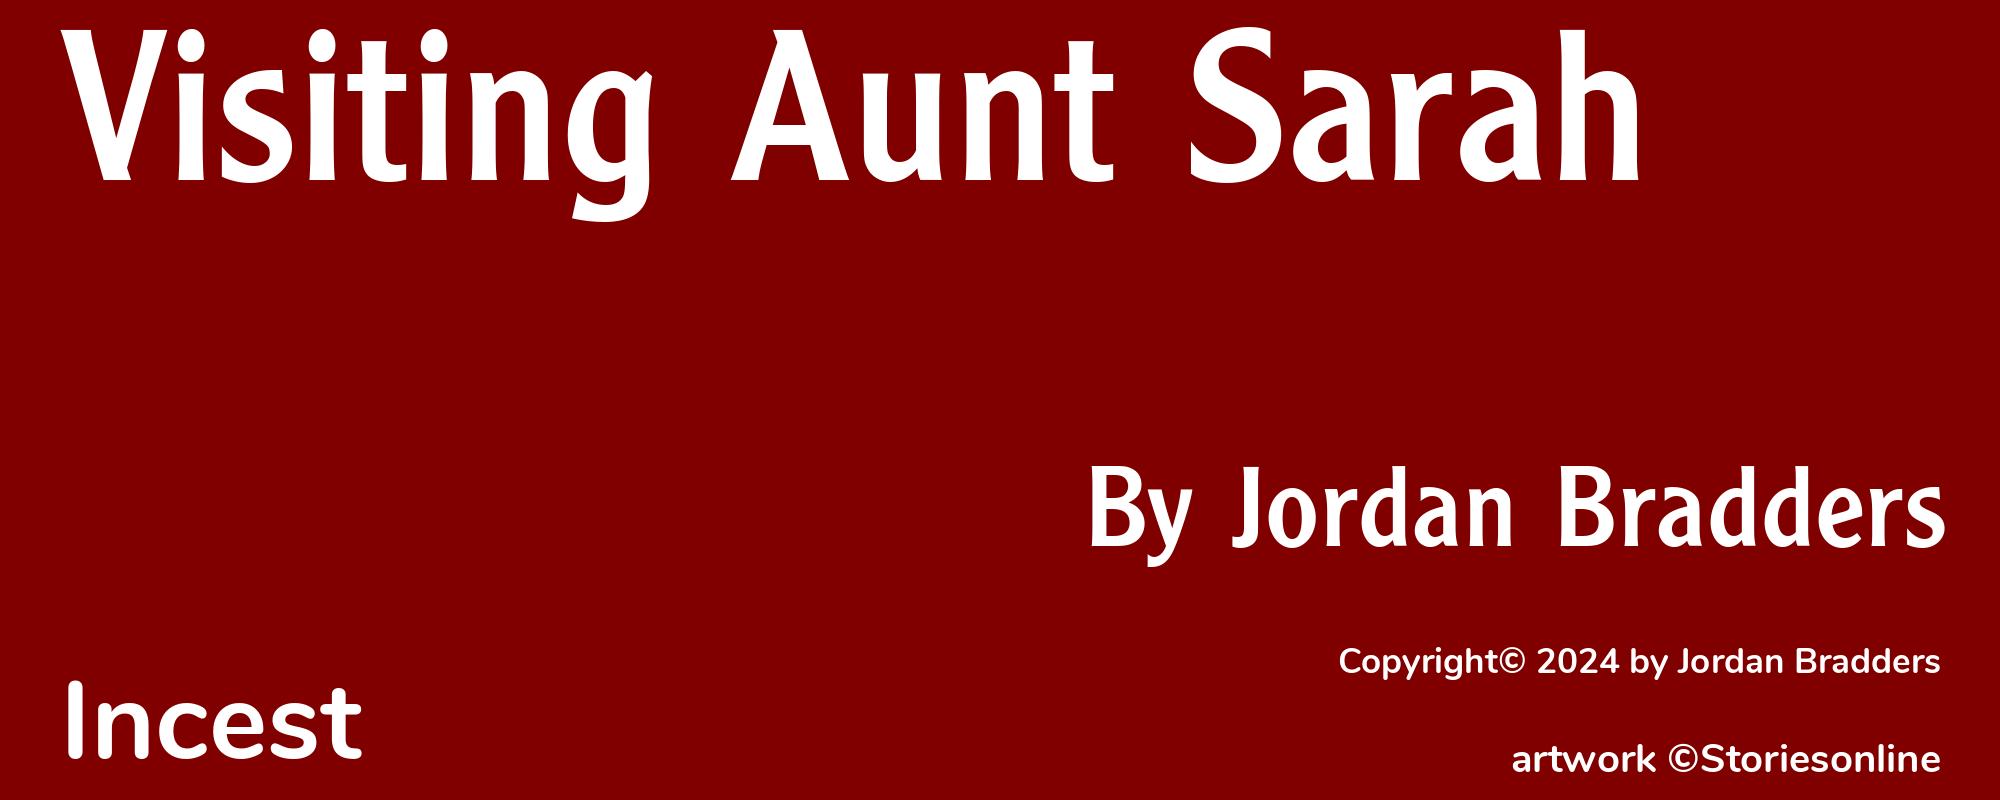 Visiting Aunt Sarah - Cover